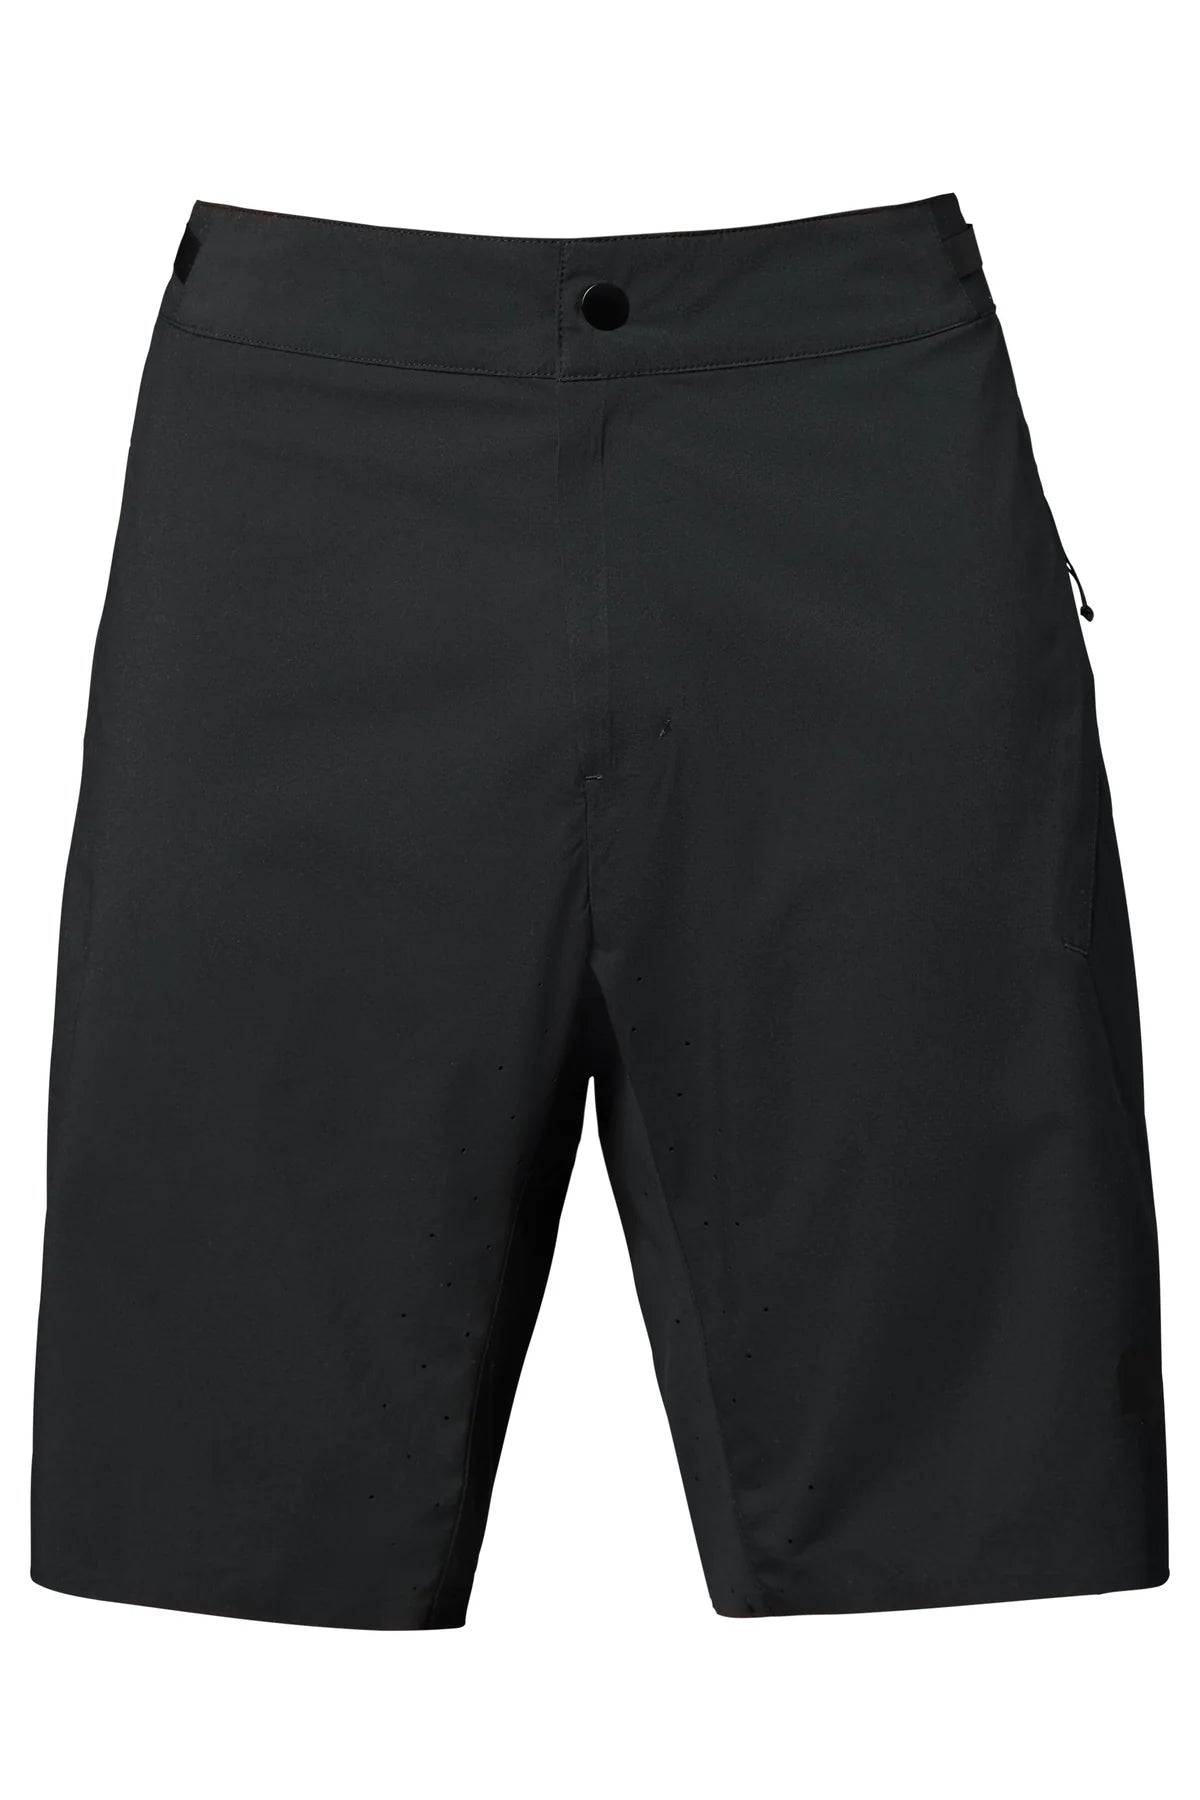 Flylow Laser Short - Men's shorts Black